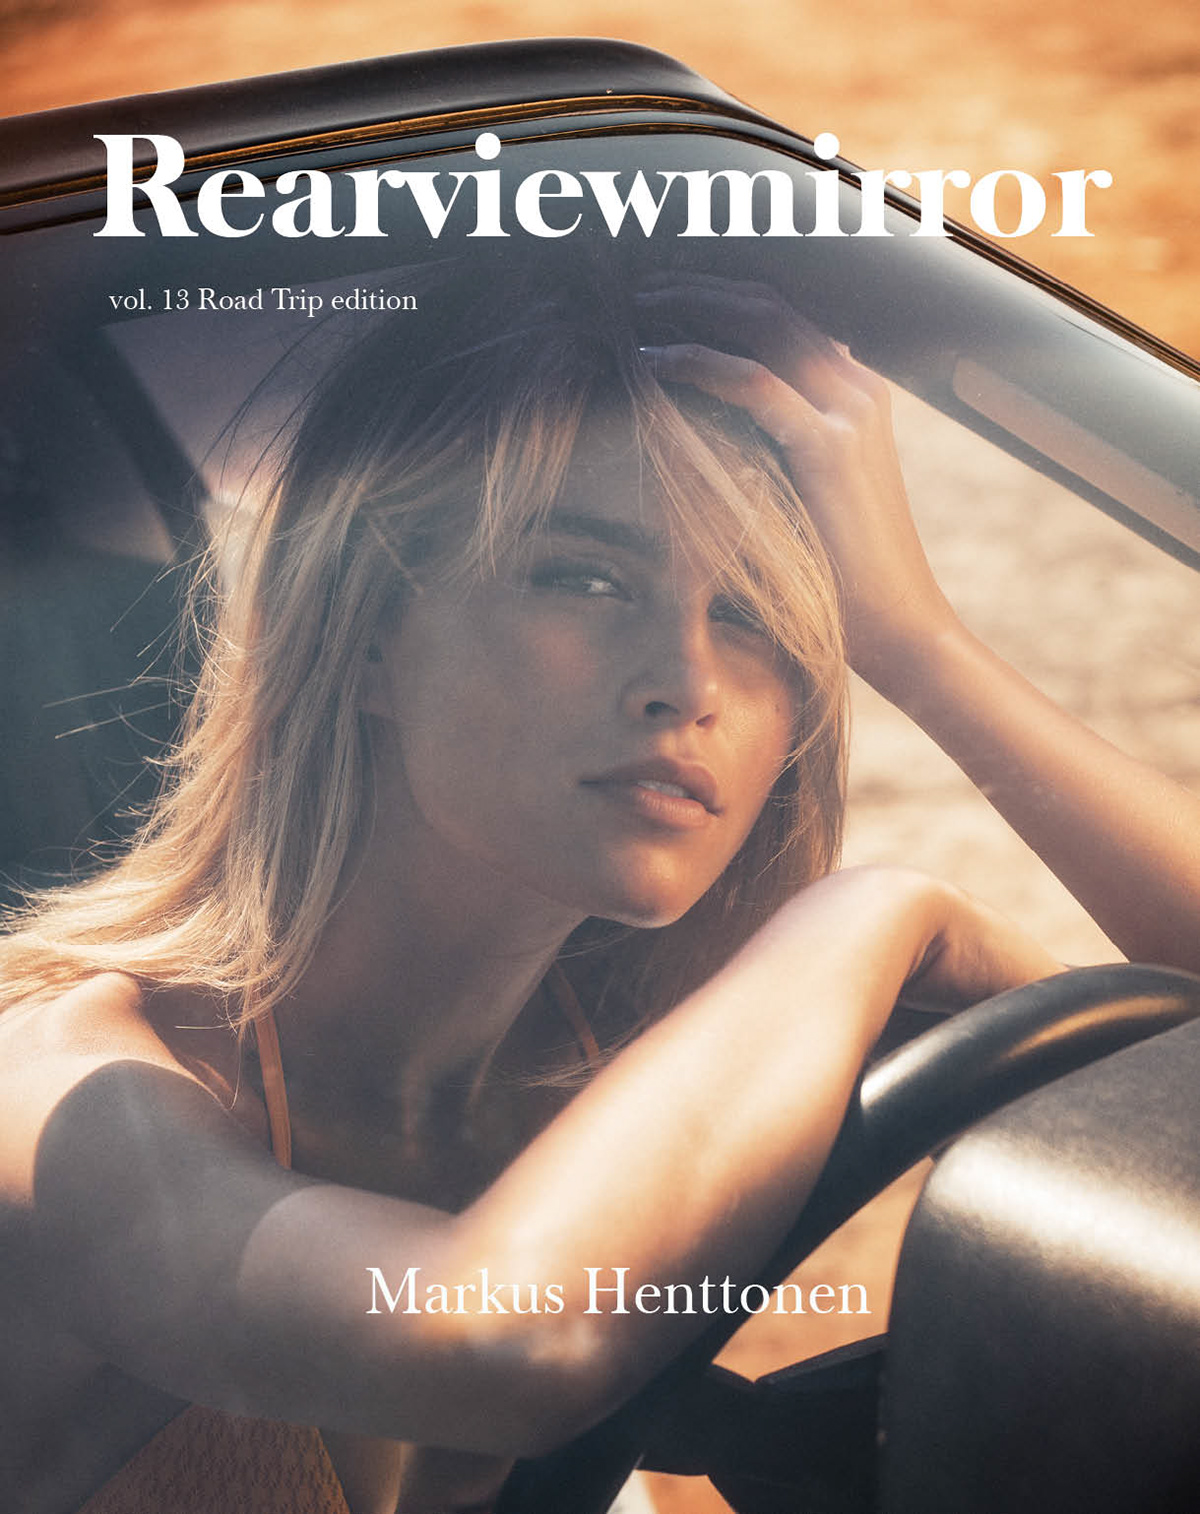 Rearviewmirror vol. 13, Markus Henttonen portfolio, Olivia Aarnio portrait